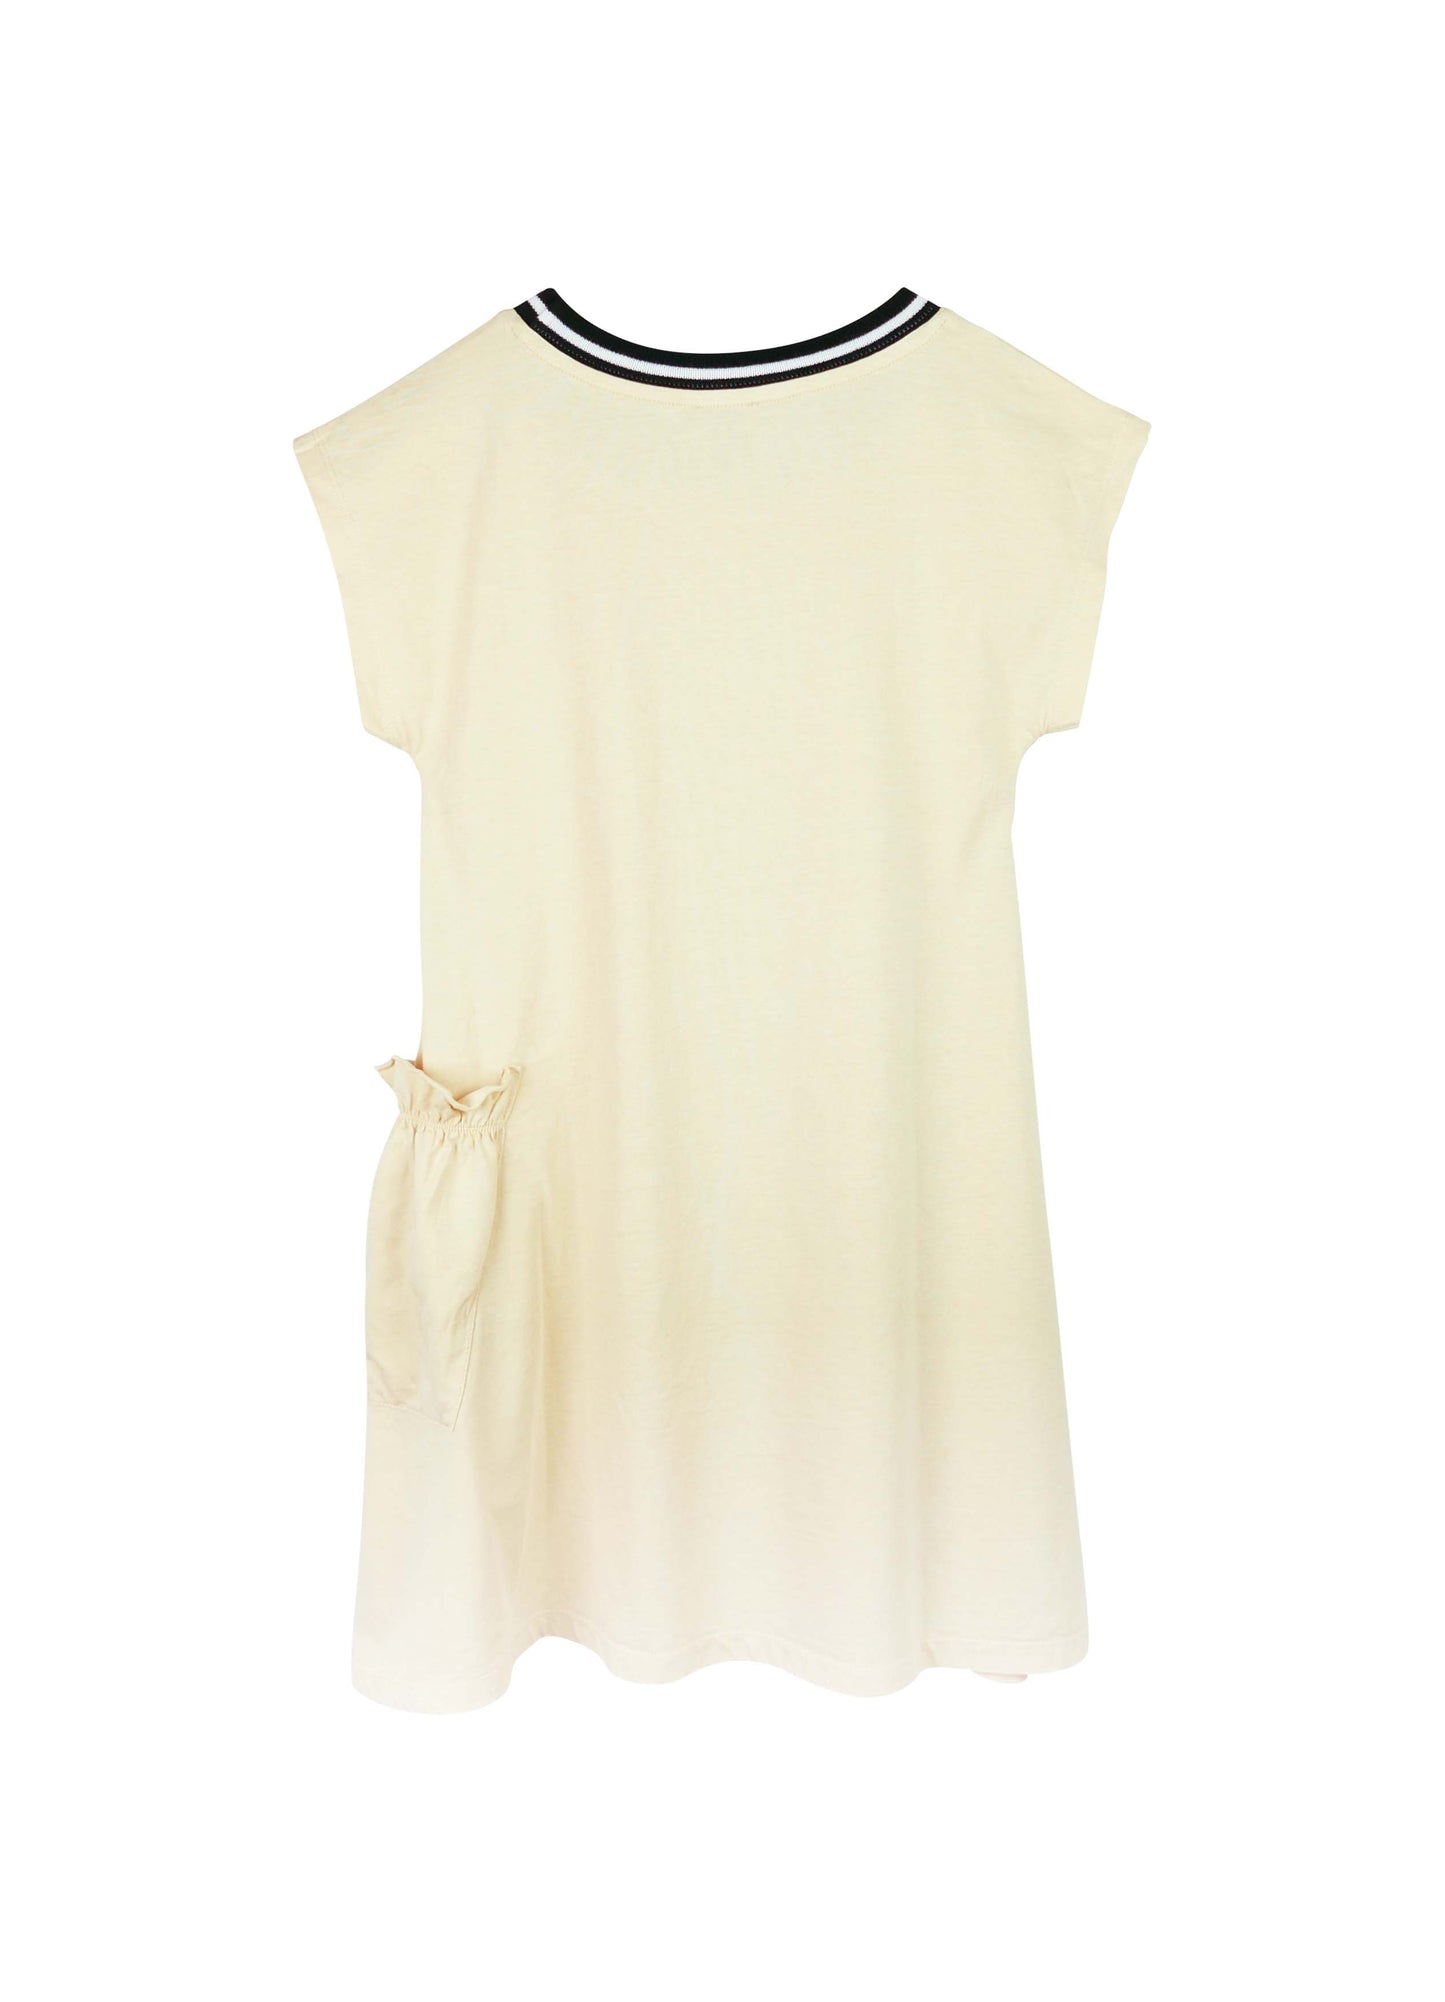 Dress Nr. 29 - Ivory Cream